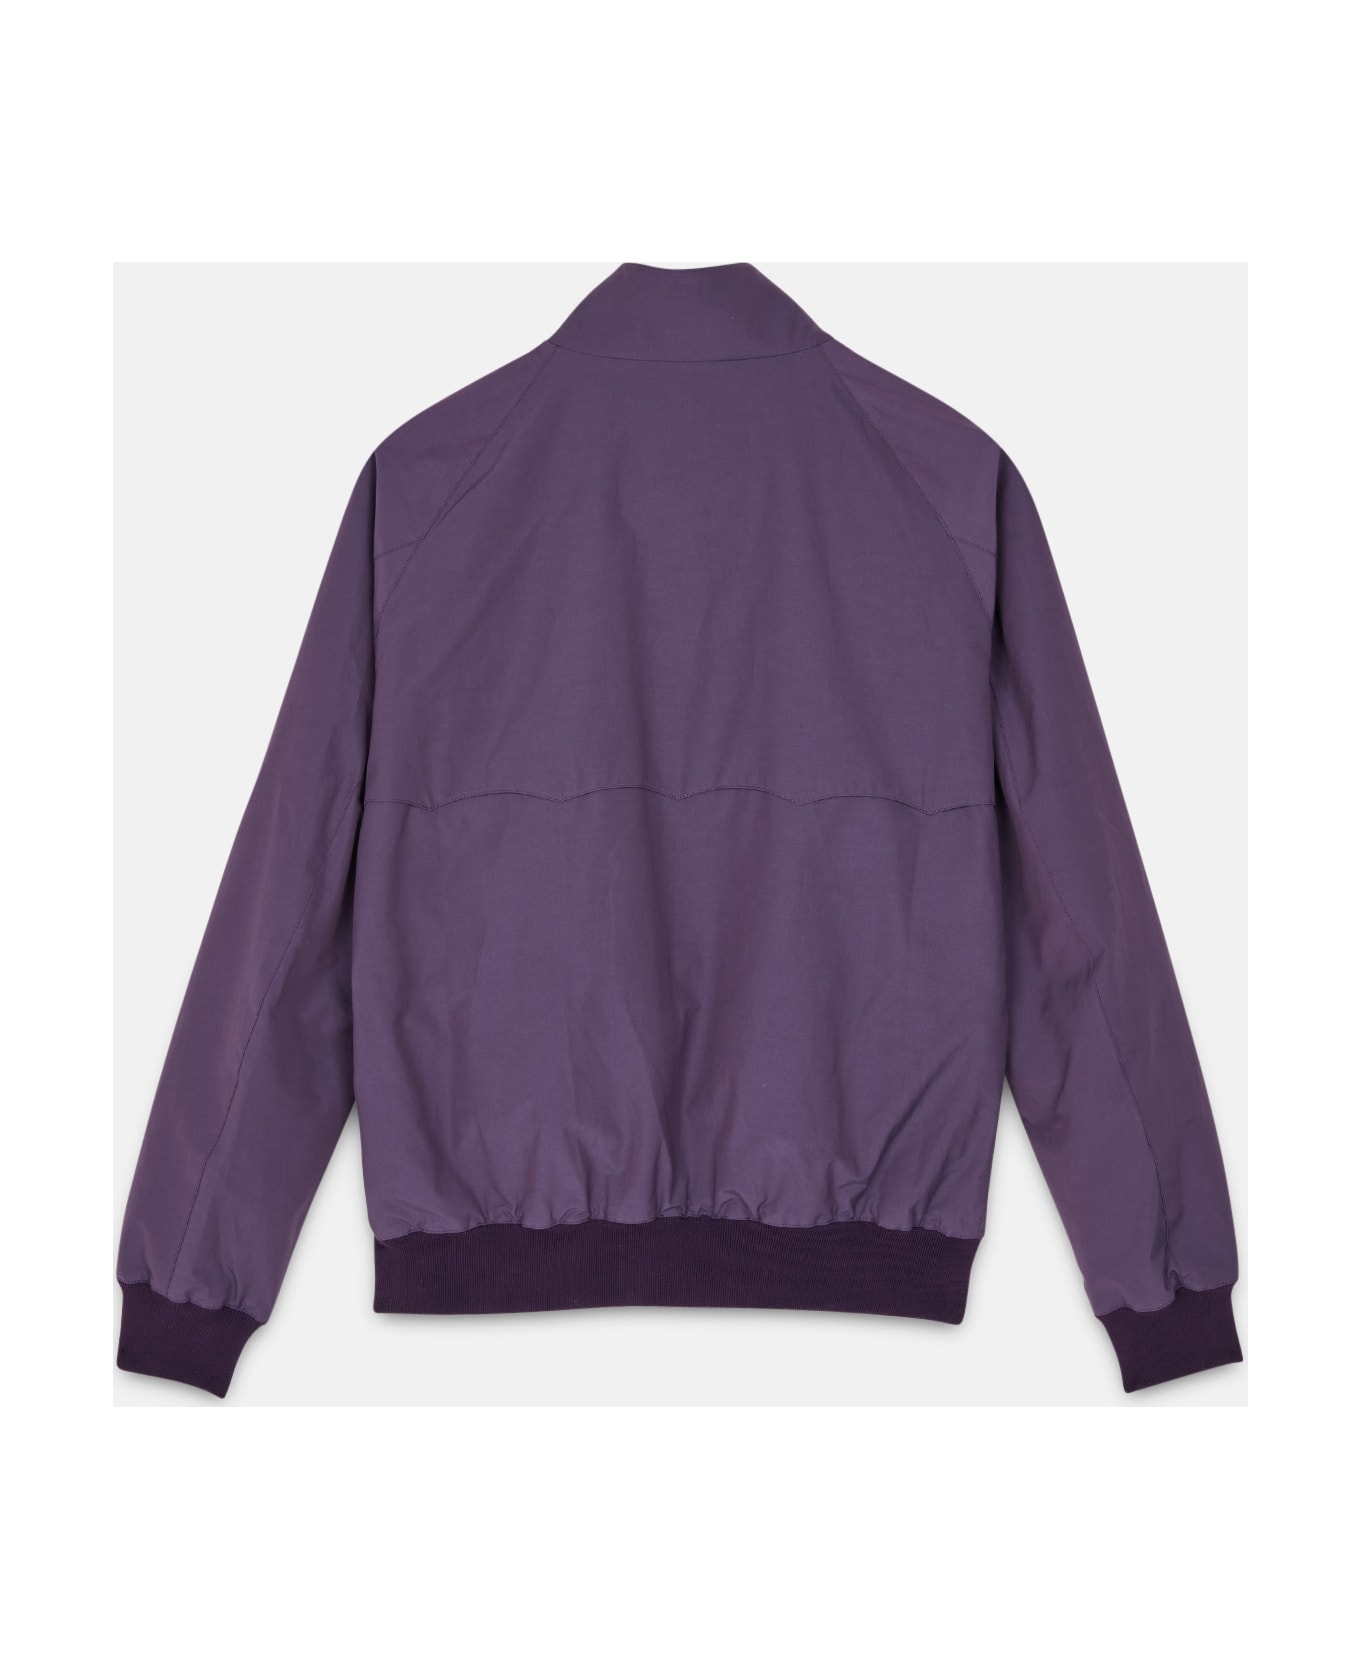 Baracuta G9 Cloth - Purple Plum ジャケット